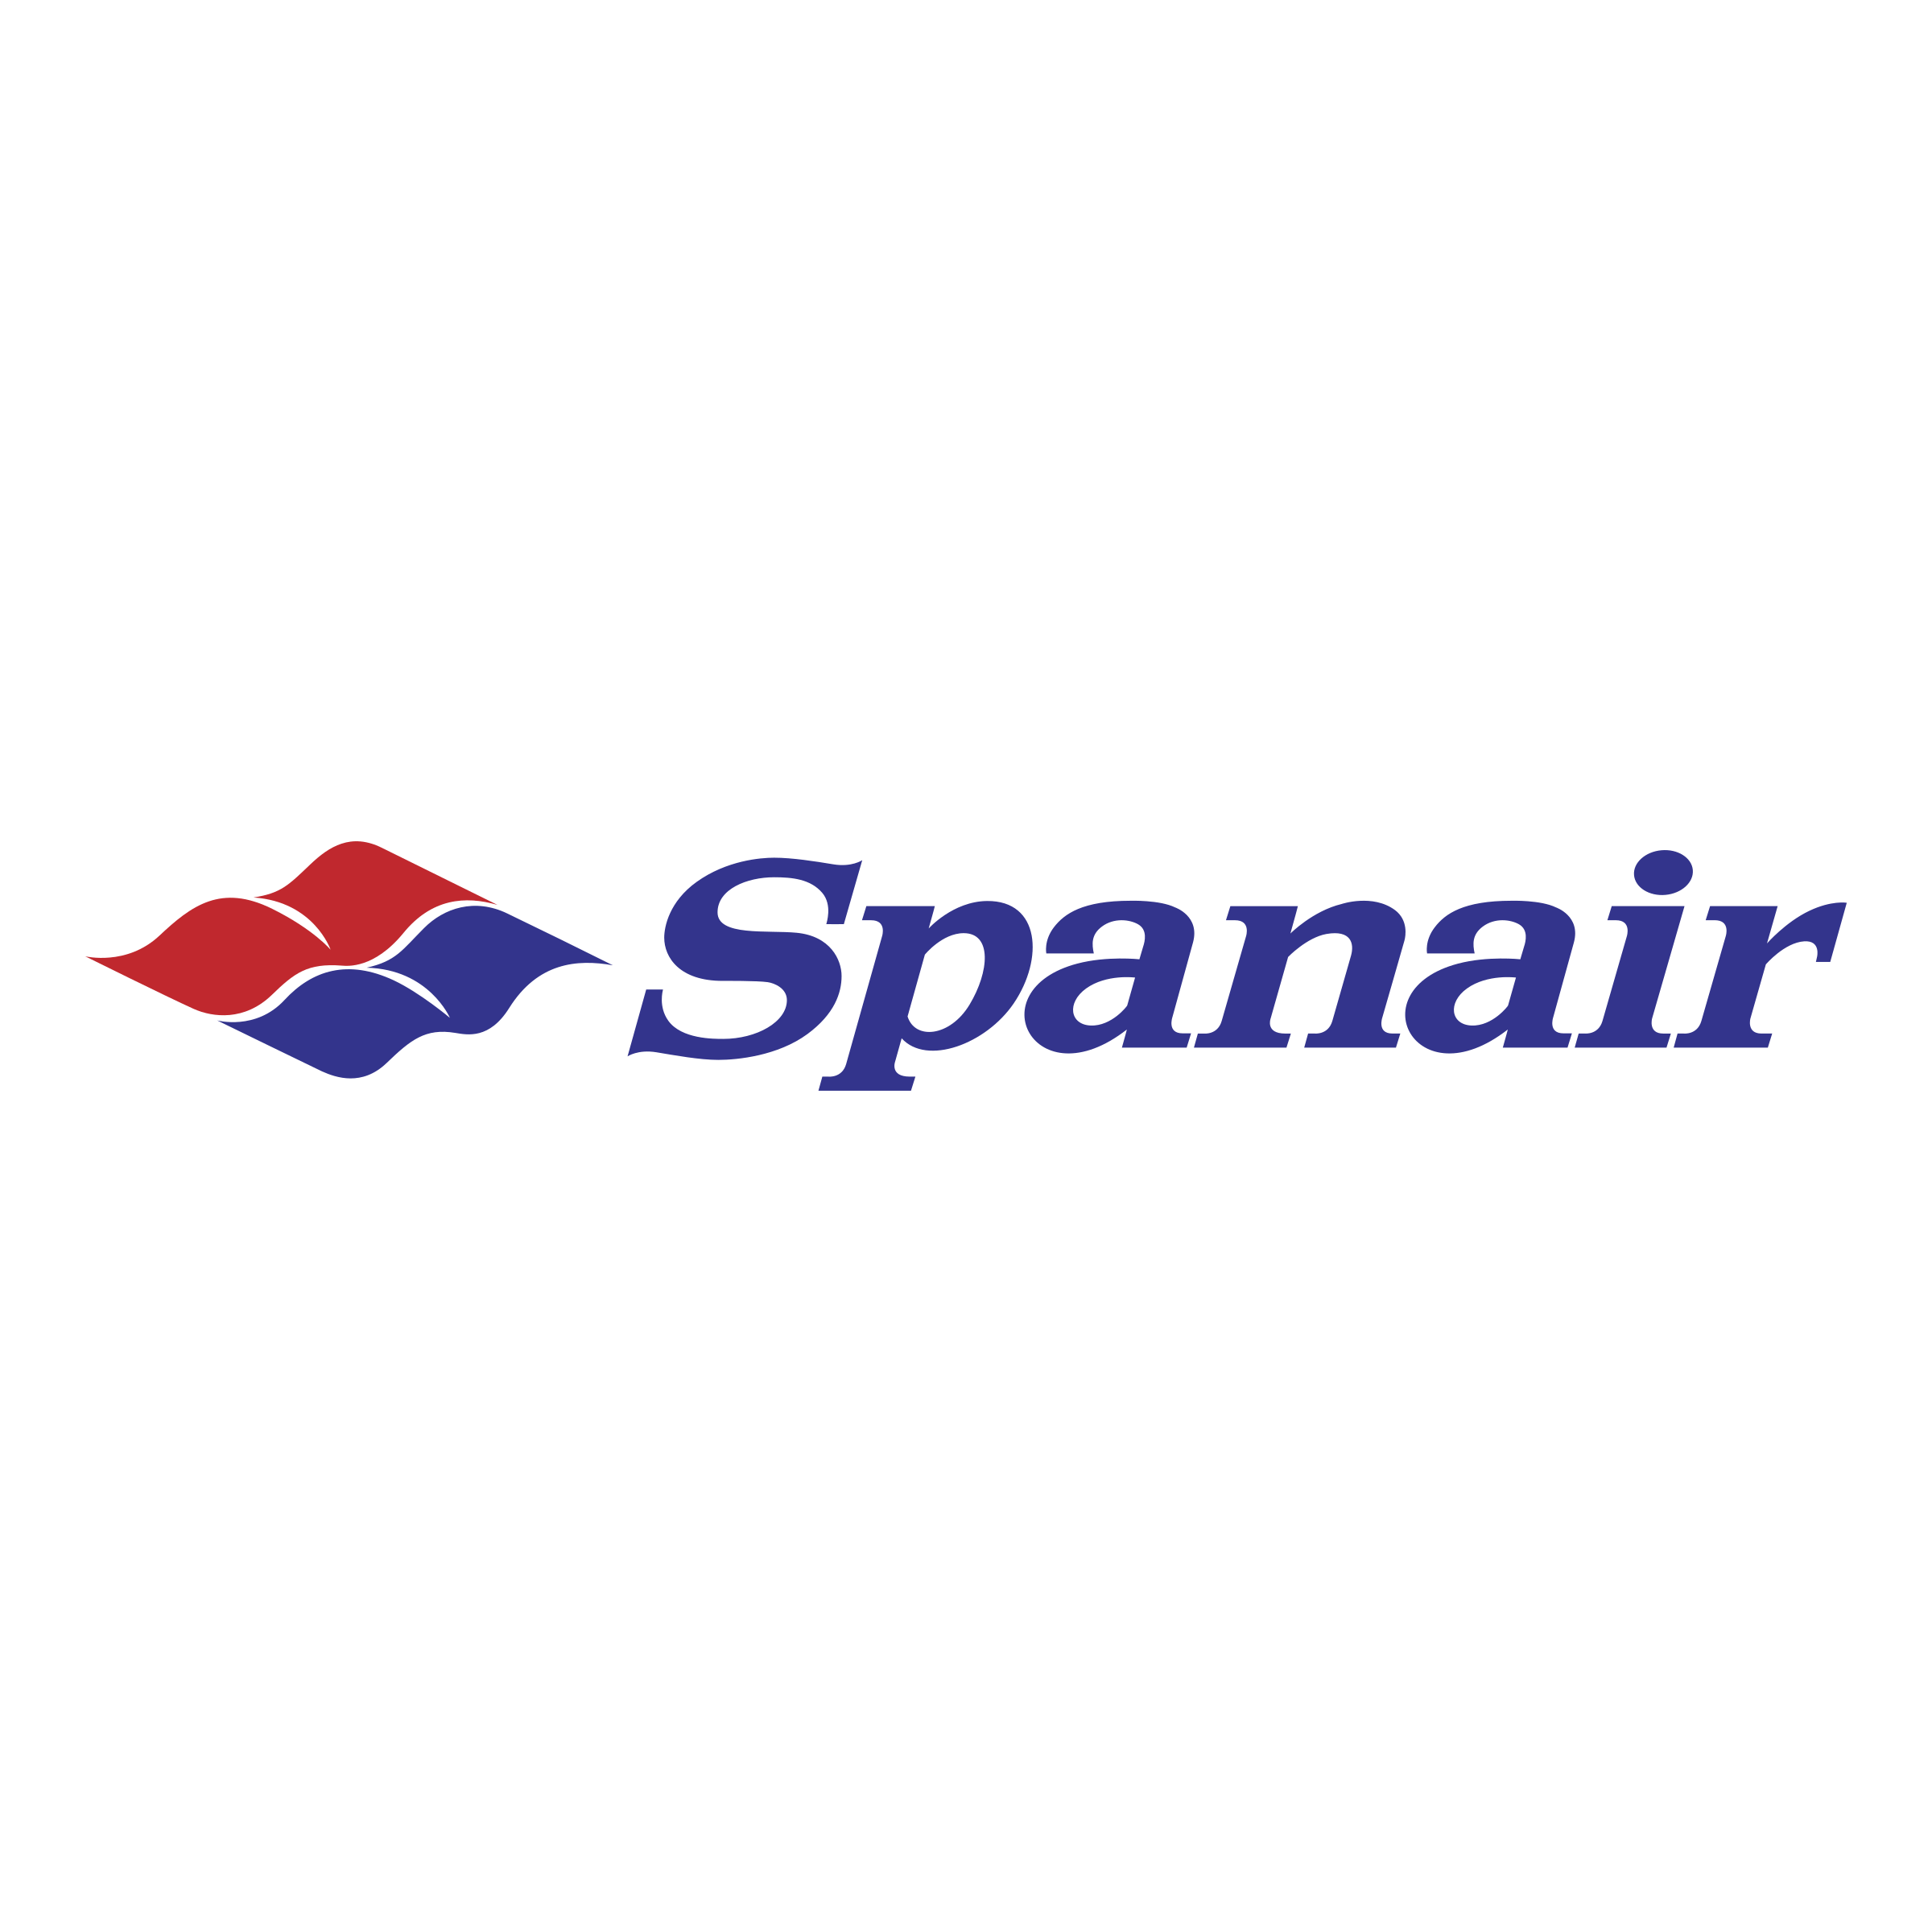 Spanair Logo - Spanair Logo PNG Transparent & SVG Vector - Freebie Supply